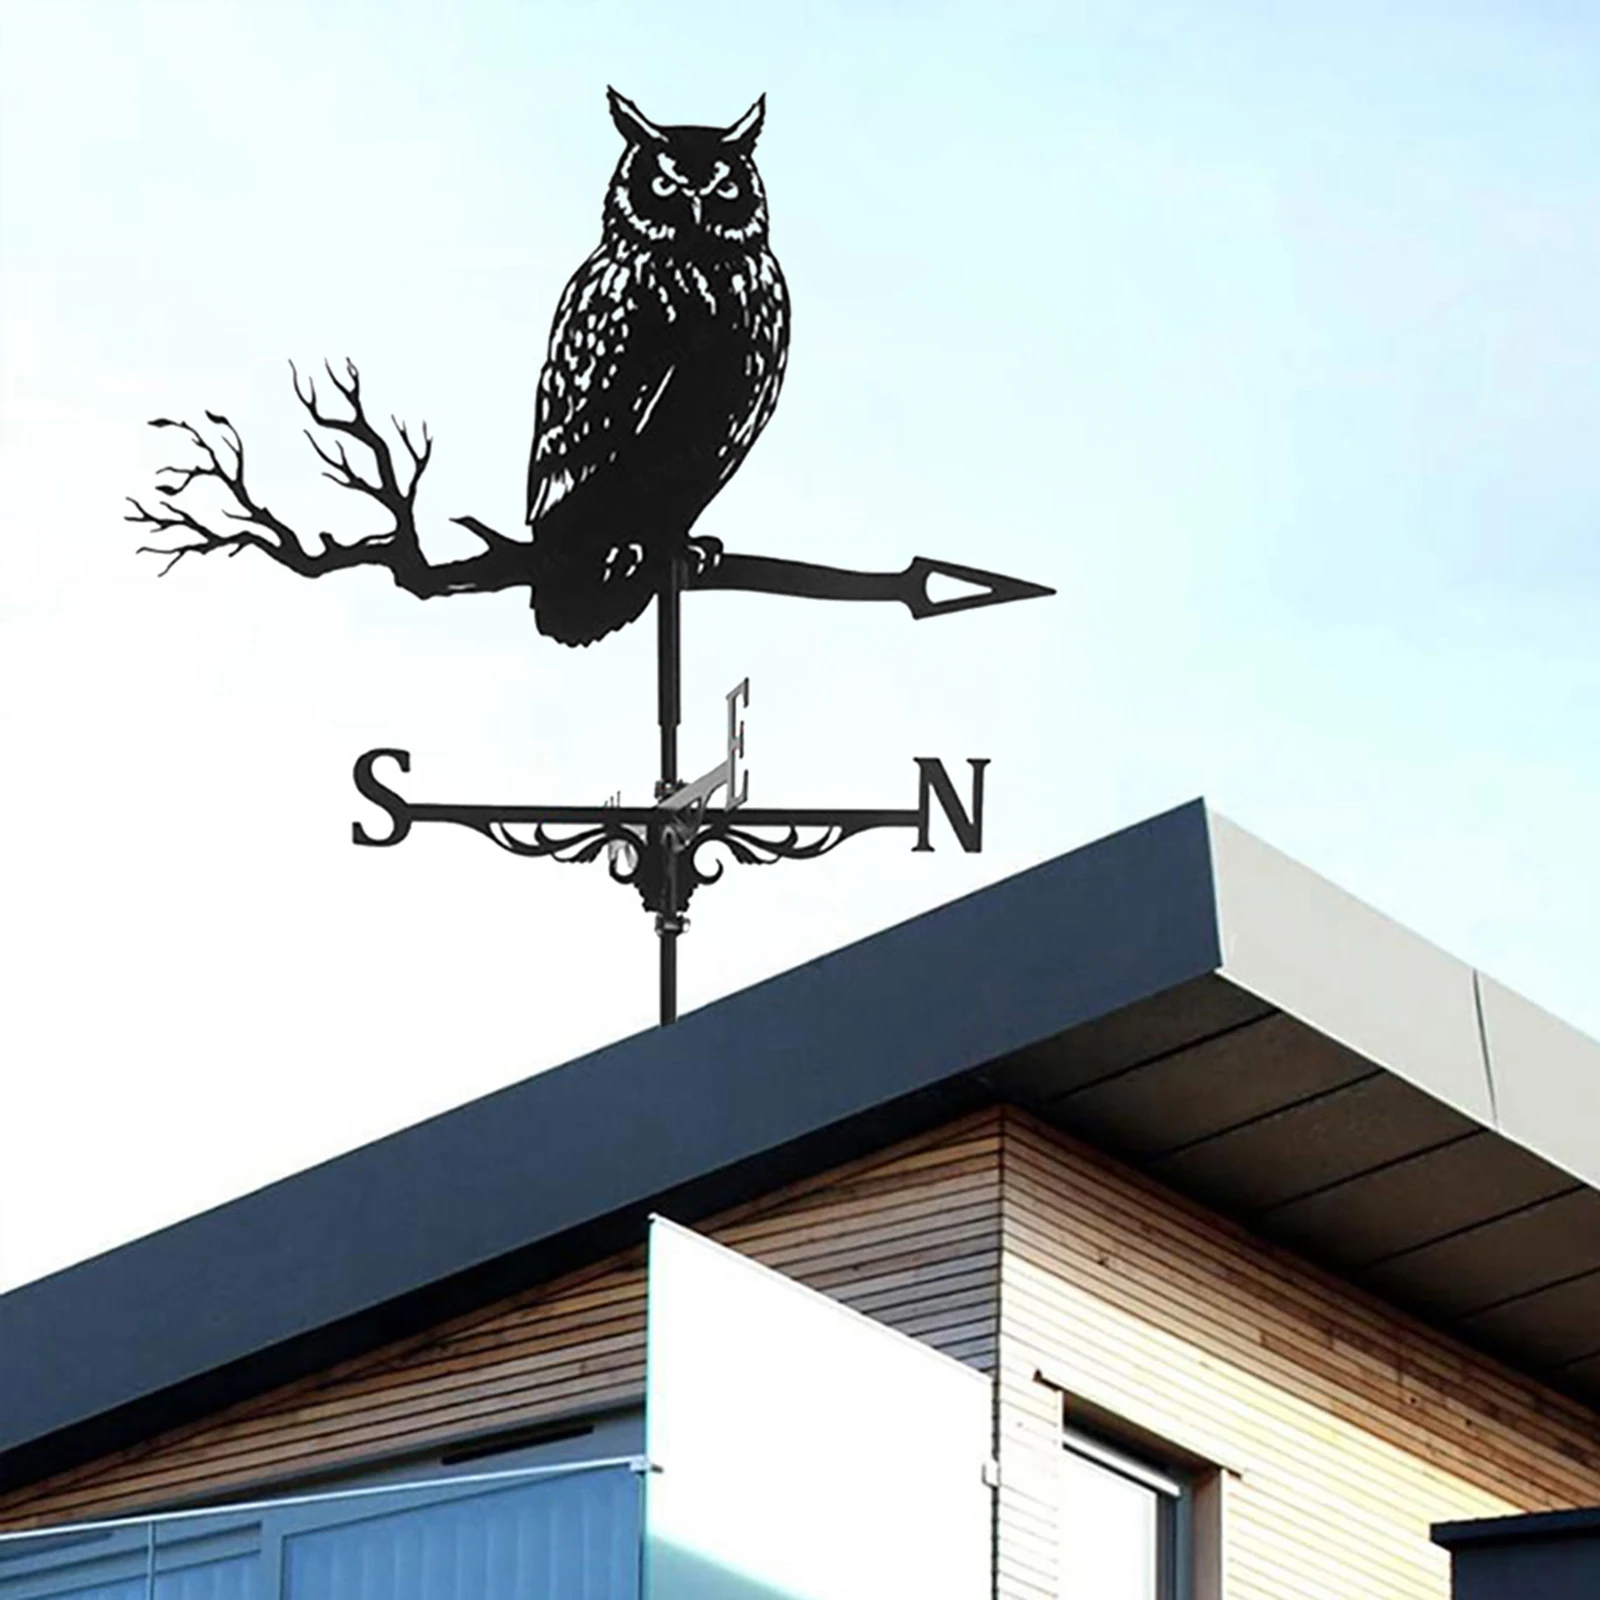 Practical Owl Weathervane Roof Mount Weather Vane Outdoor Ornament 30`` Tall